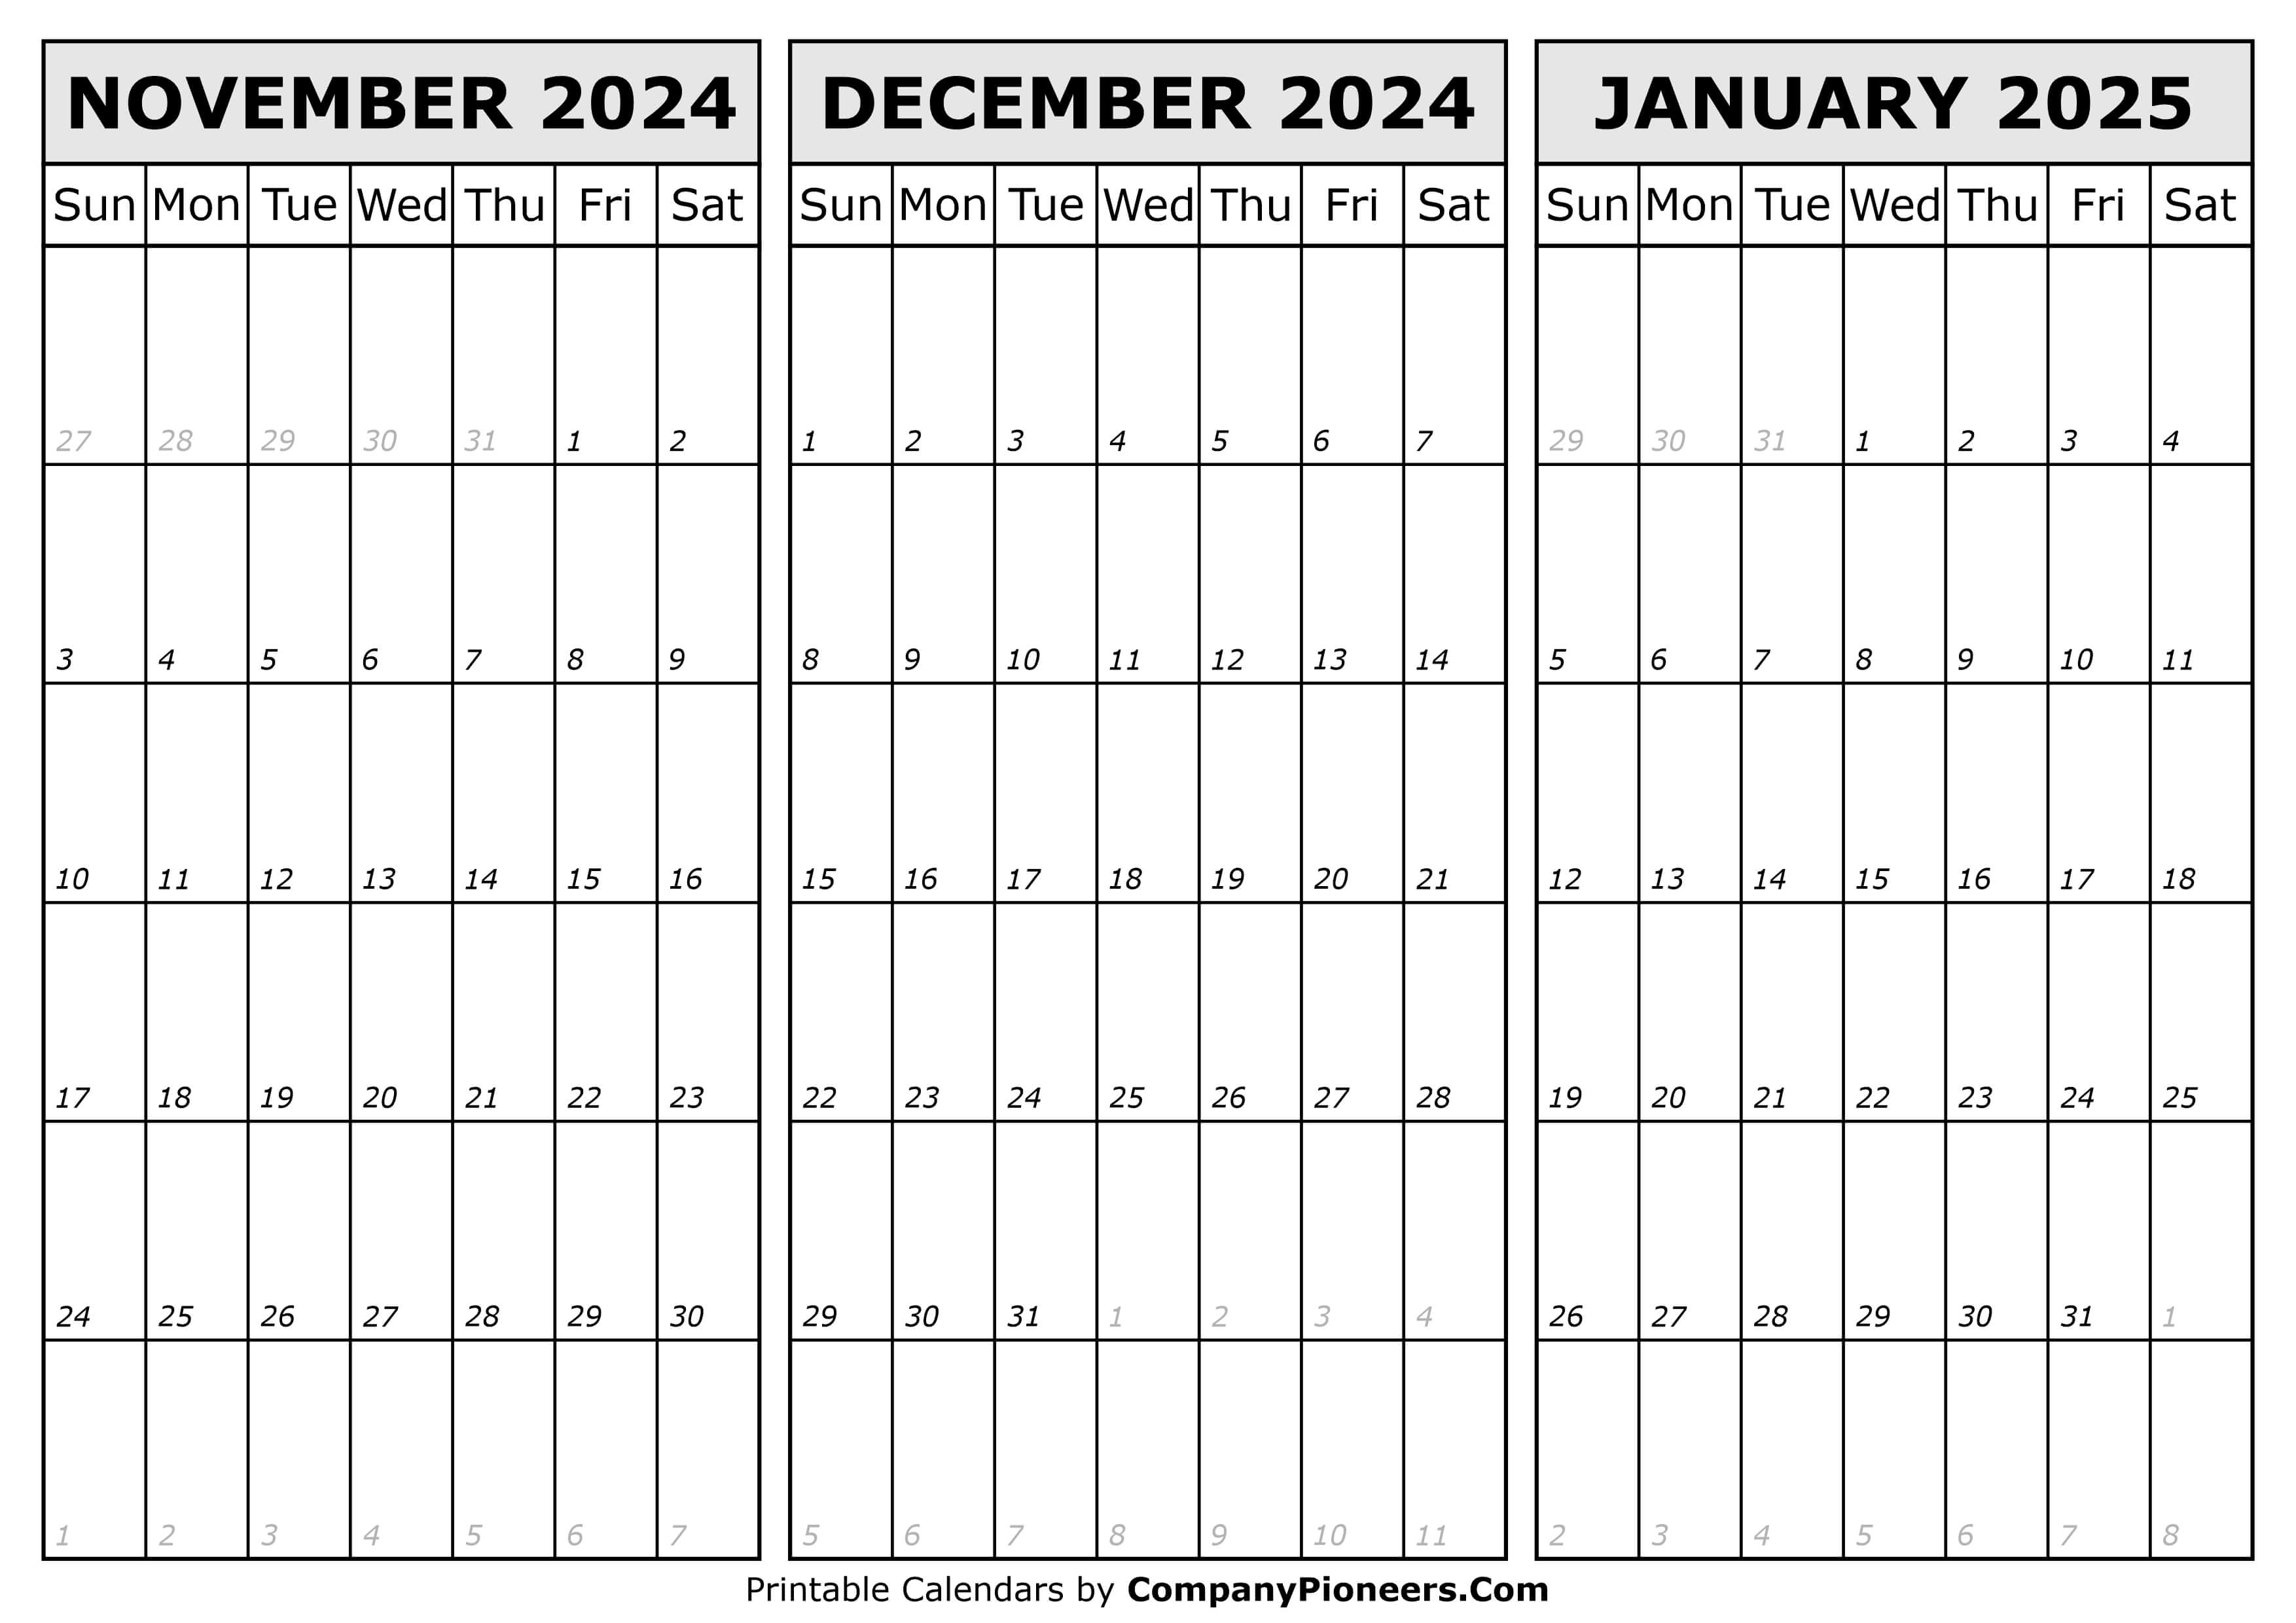 Calendar November 2024 to January 2025